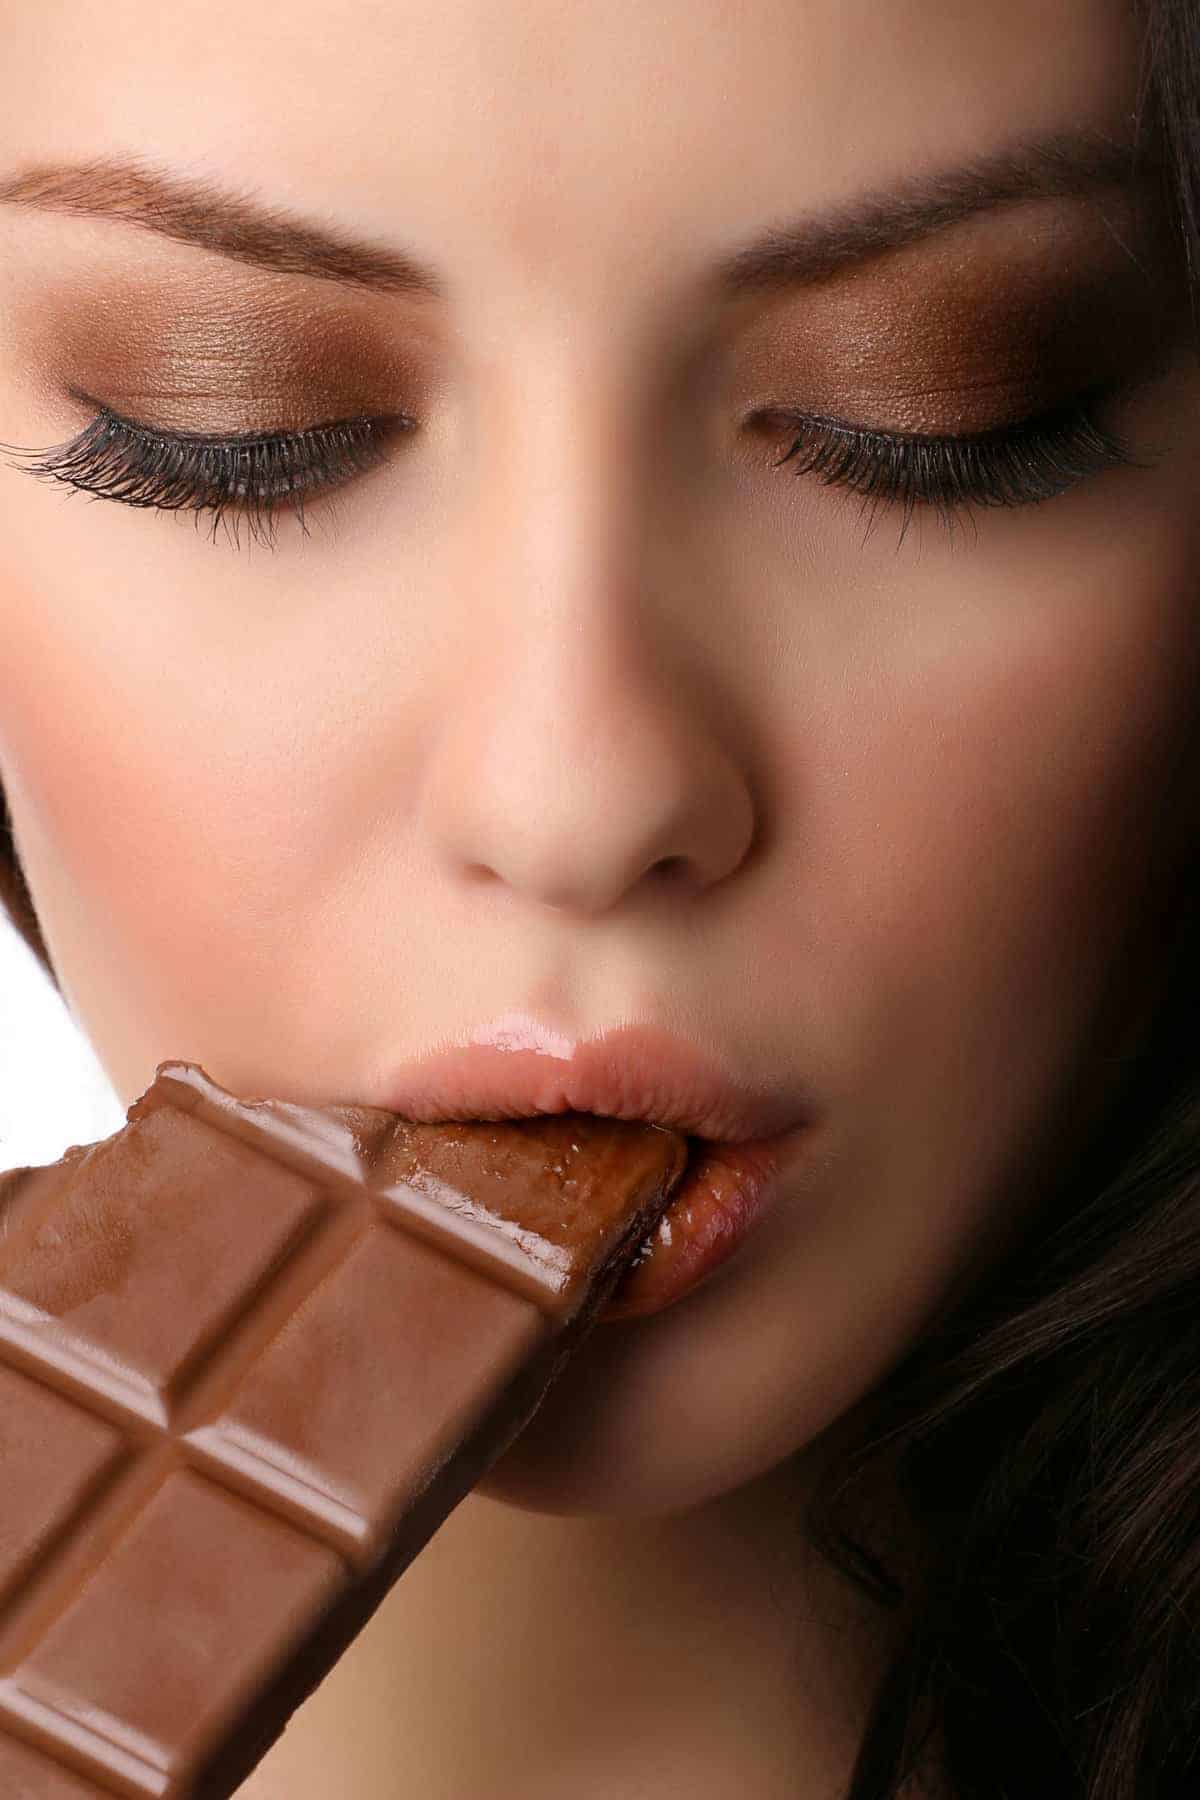 Шоколадова диета